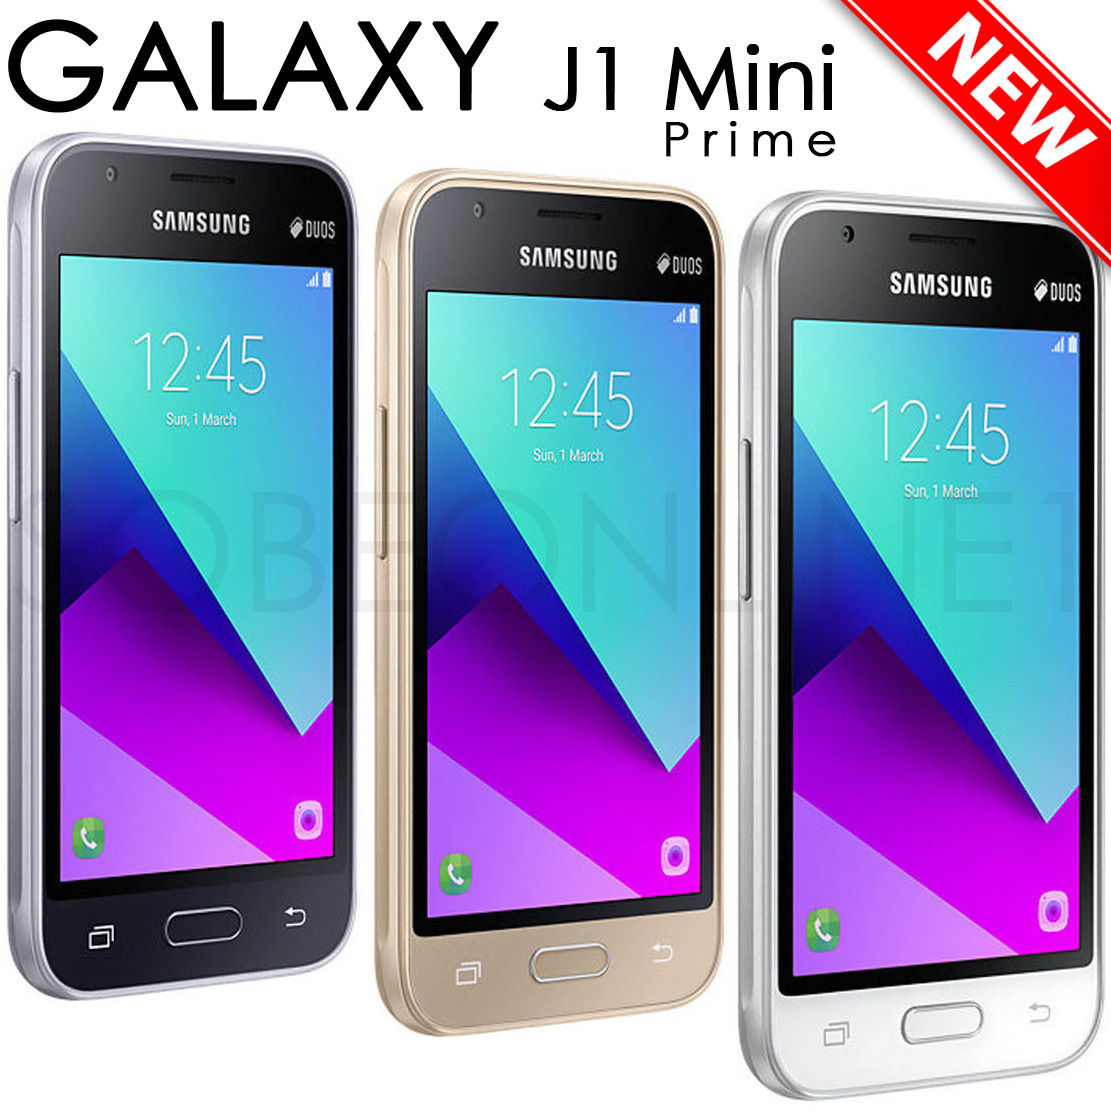 Мини прим. Samsung Galaxy j1 Mini. Samsung j1 Mini Prime. Samsung Galaxy j1 Mini Prime. Samsung Galaxy j1 Prime.